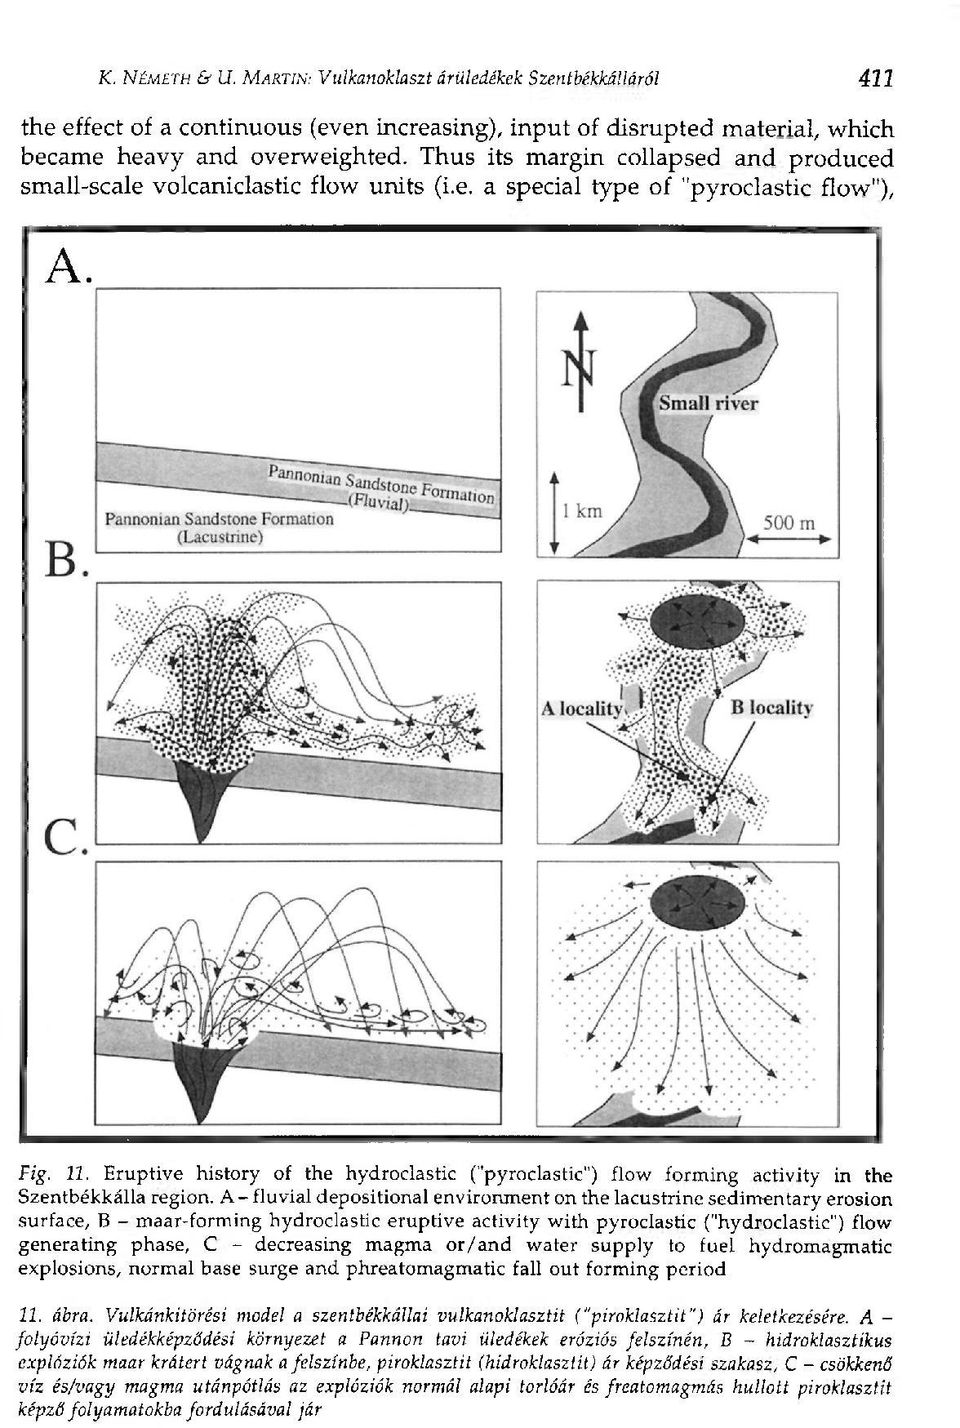 Eruptive history of the hydroclastic ("pyroclastic") flow forming activity in the Szentbékkálla region.